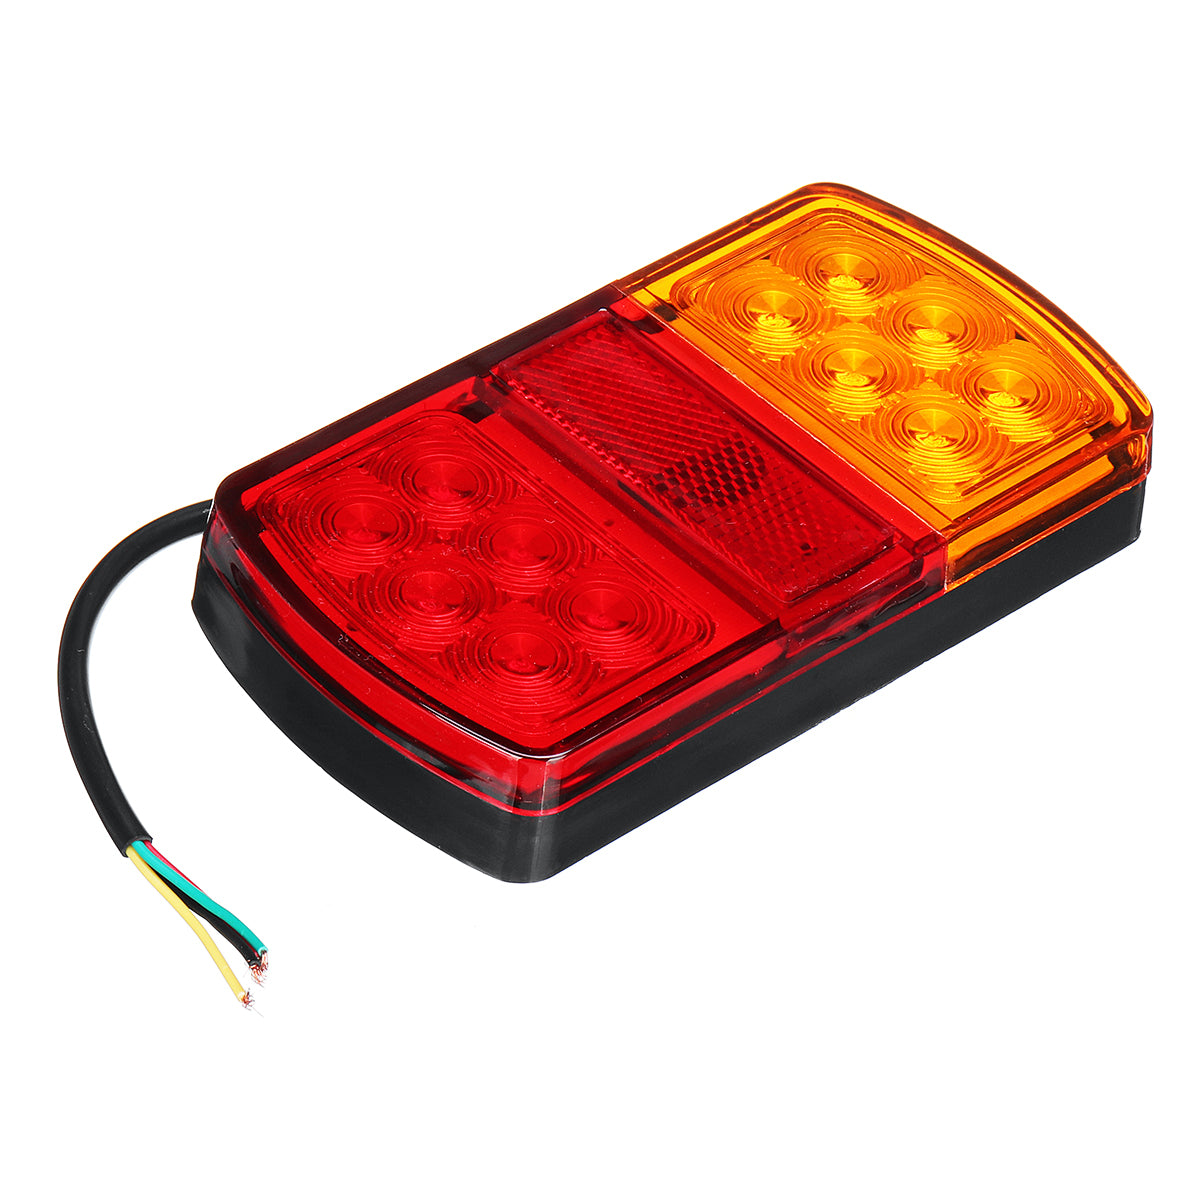 Red 3PCS 6000K LED Car Tail Light Number Plate Light Waterproof Lamp for Truck Trailer Boat